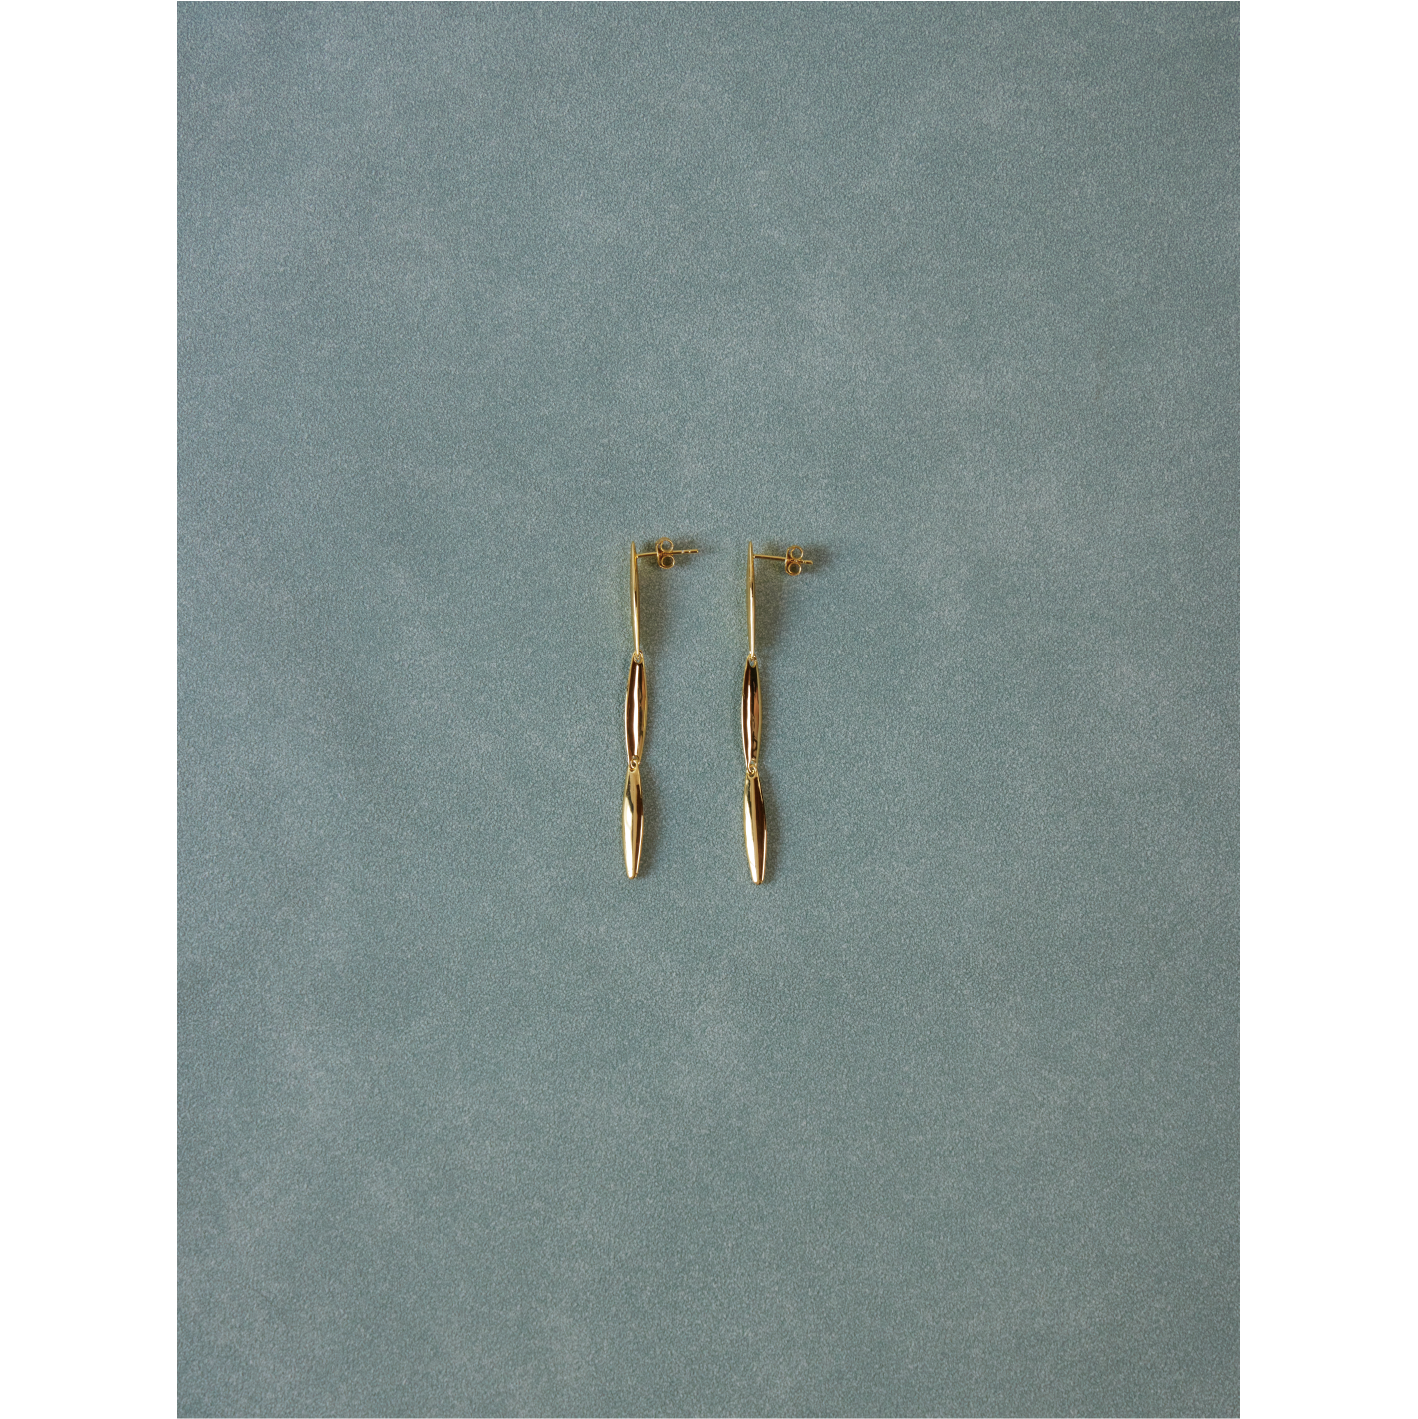 SEAFO-Seam Earrings Silver/Gold